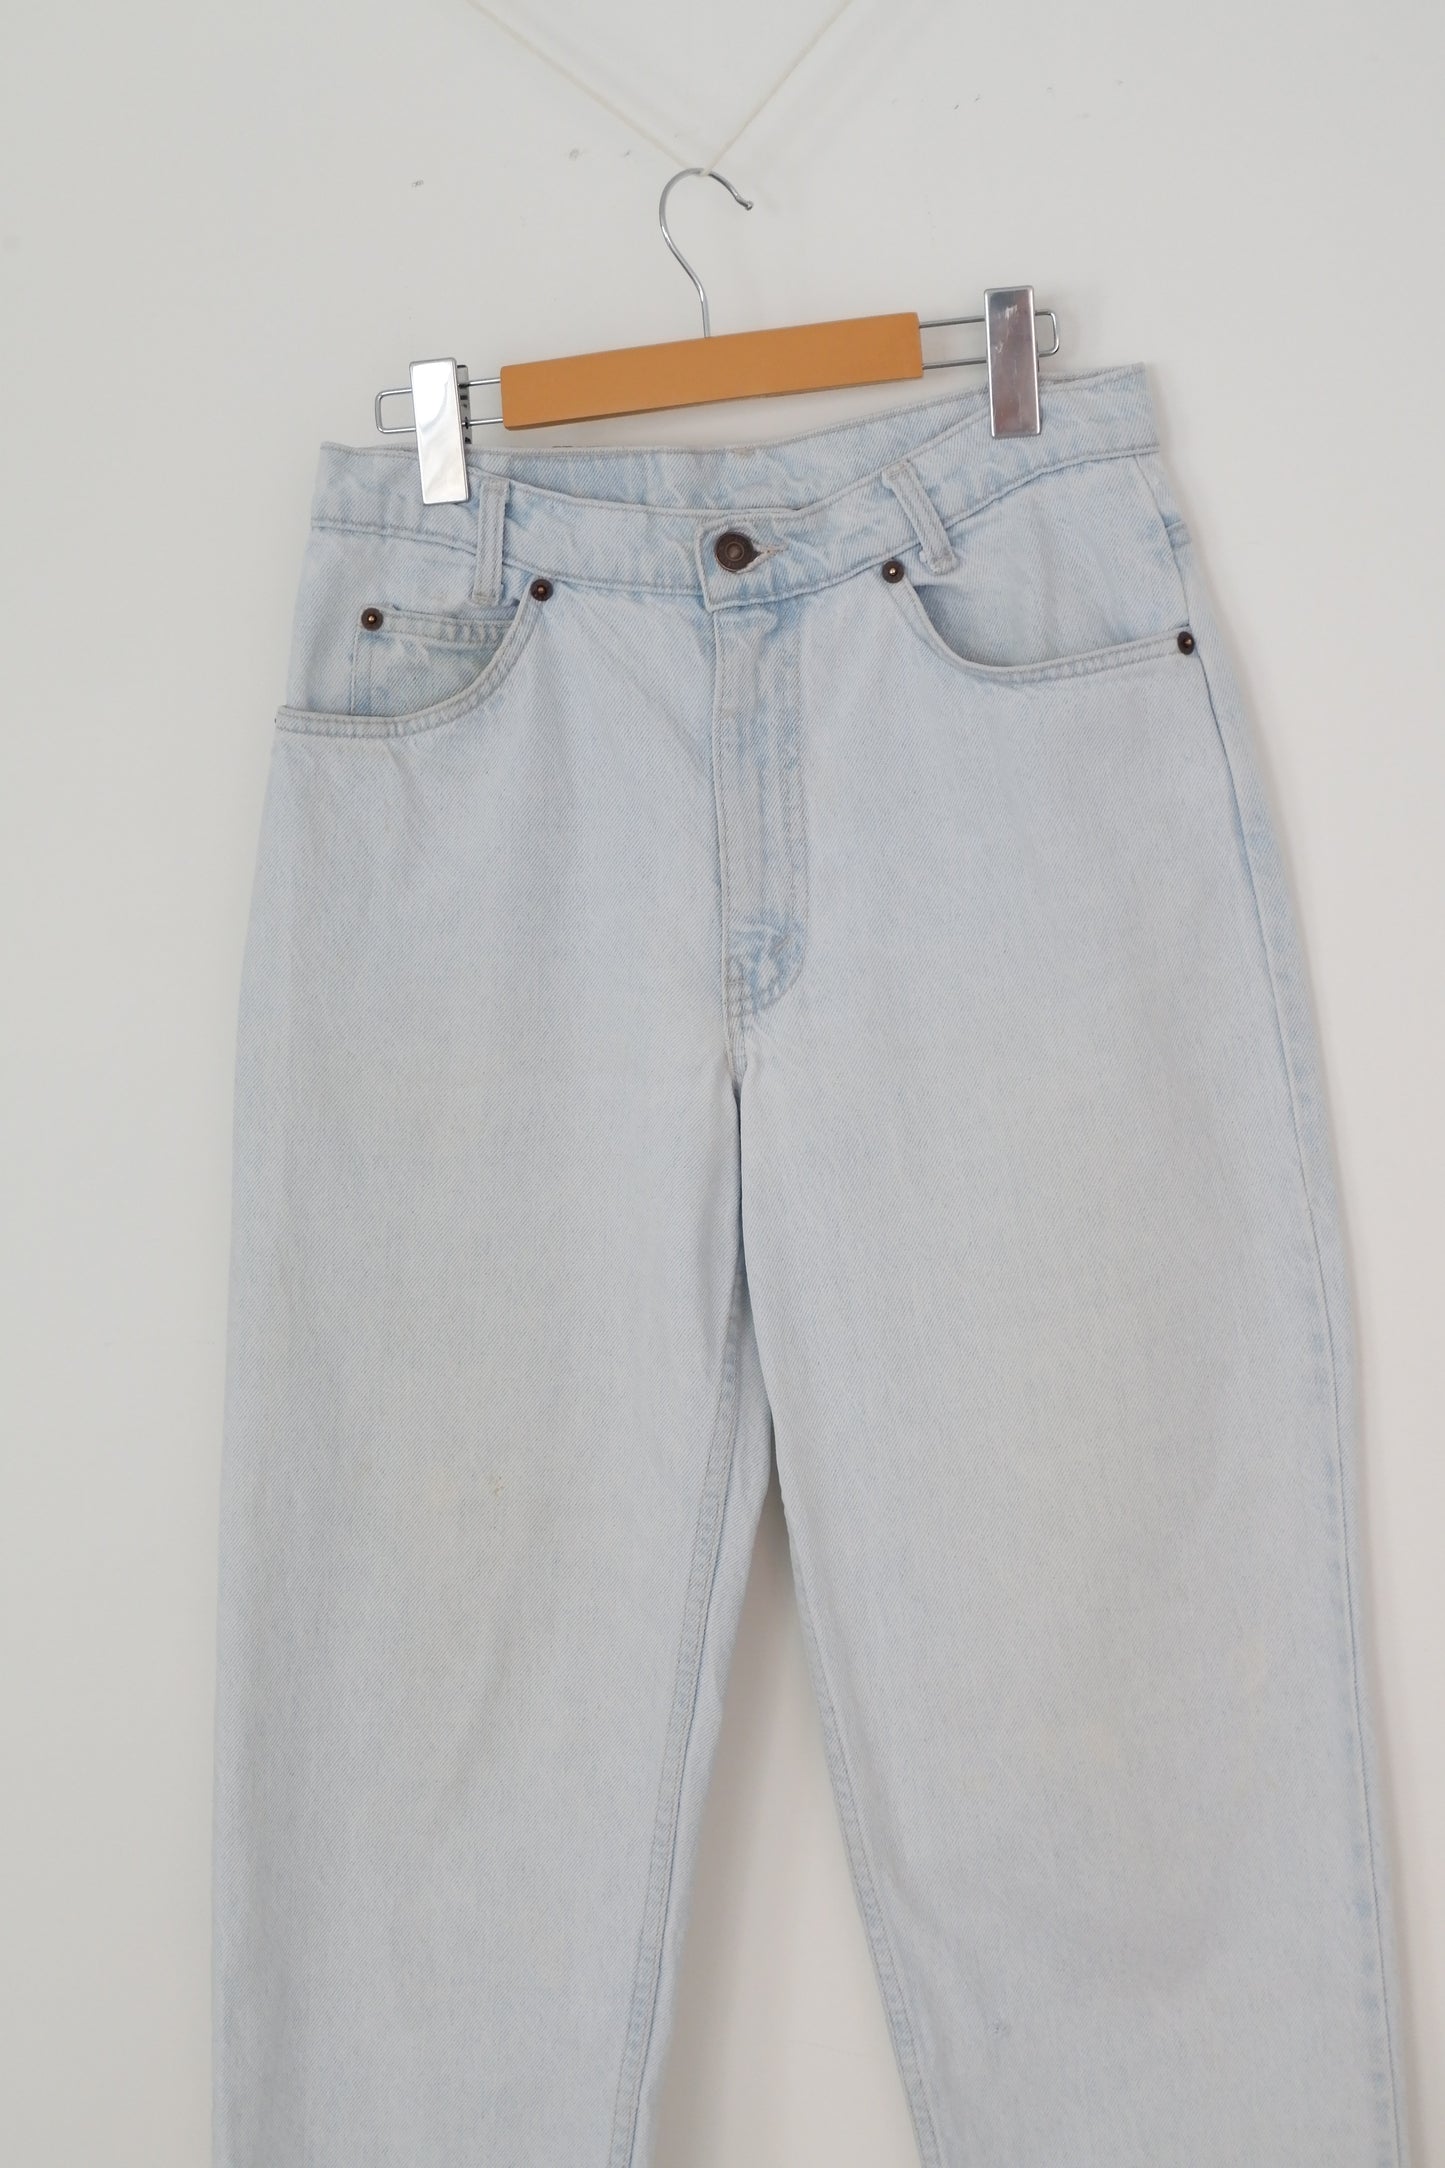 Levis Vintage 550 Light Wash Jeans - 28